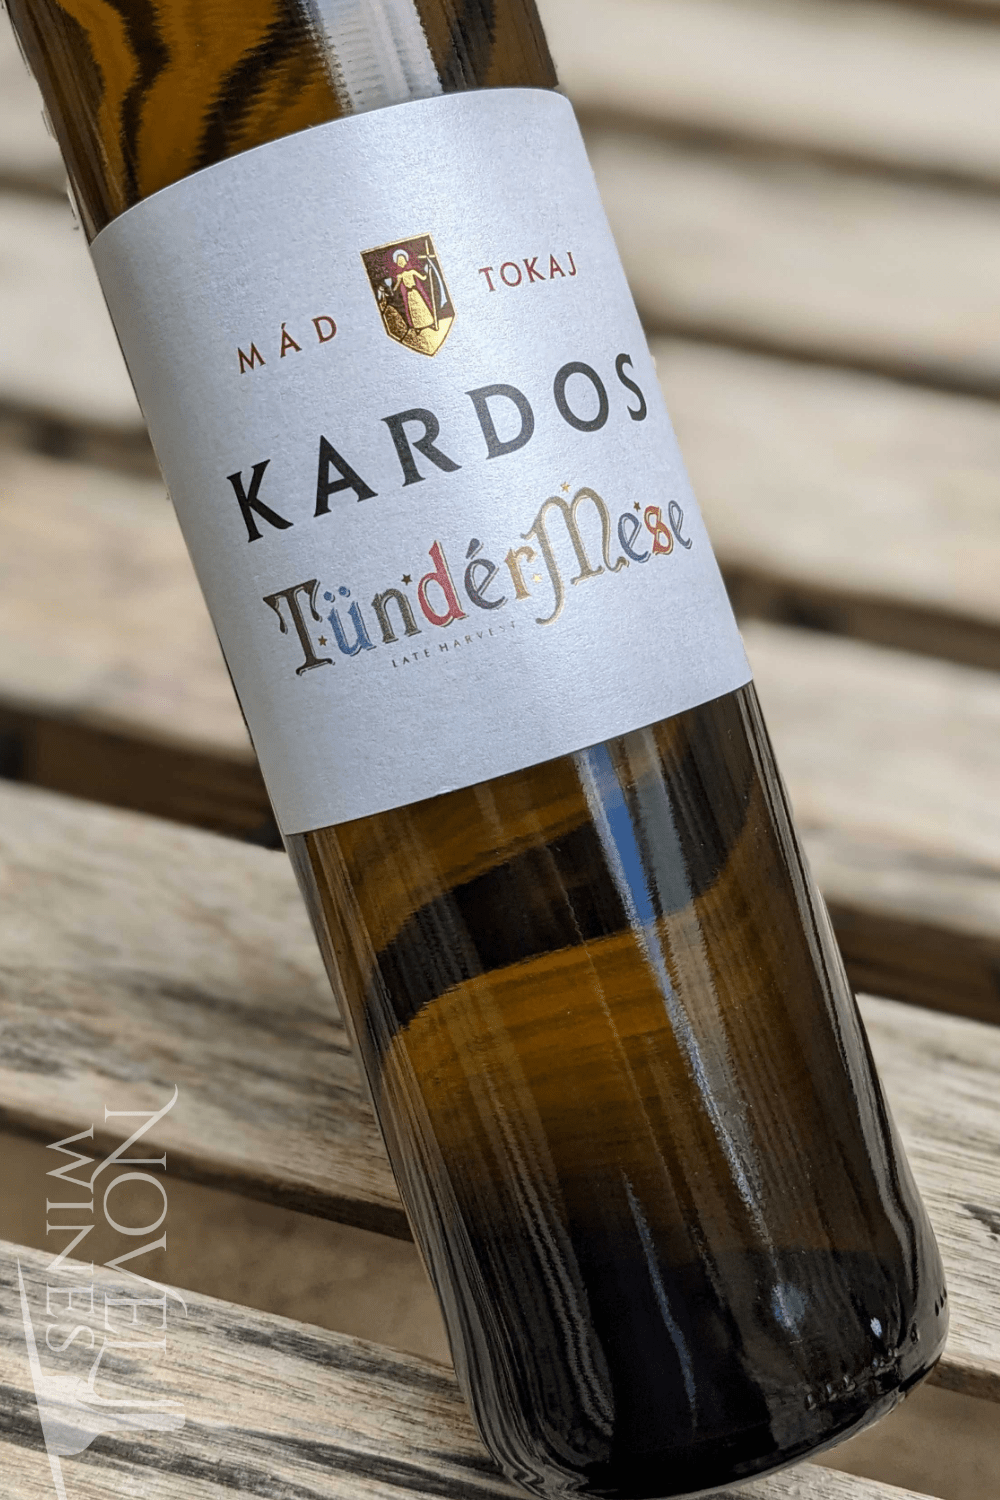 Kardos Dessert Wine Kardos Tundermese “Fairytale” Tokaji 2018, Hungary